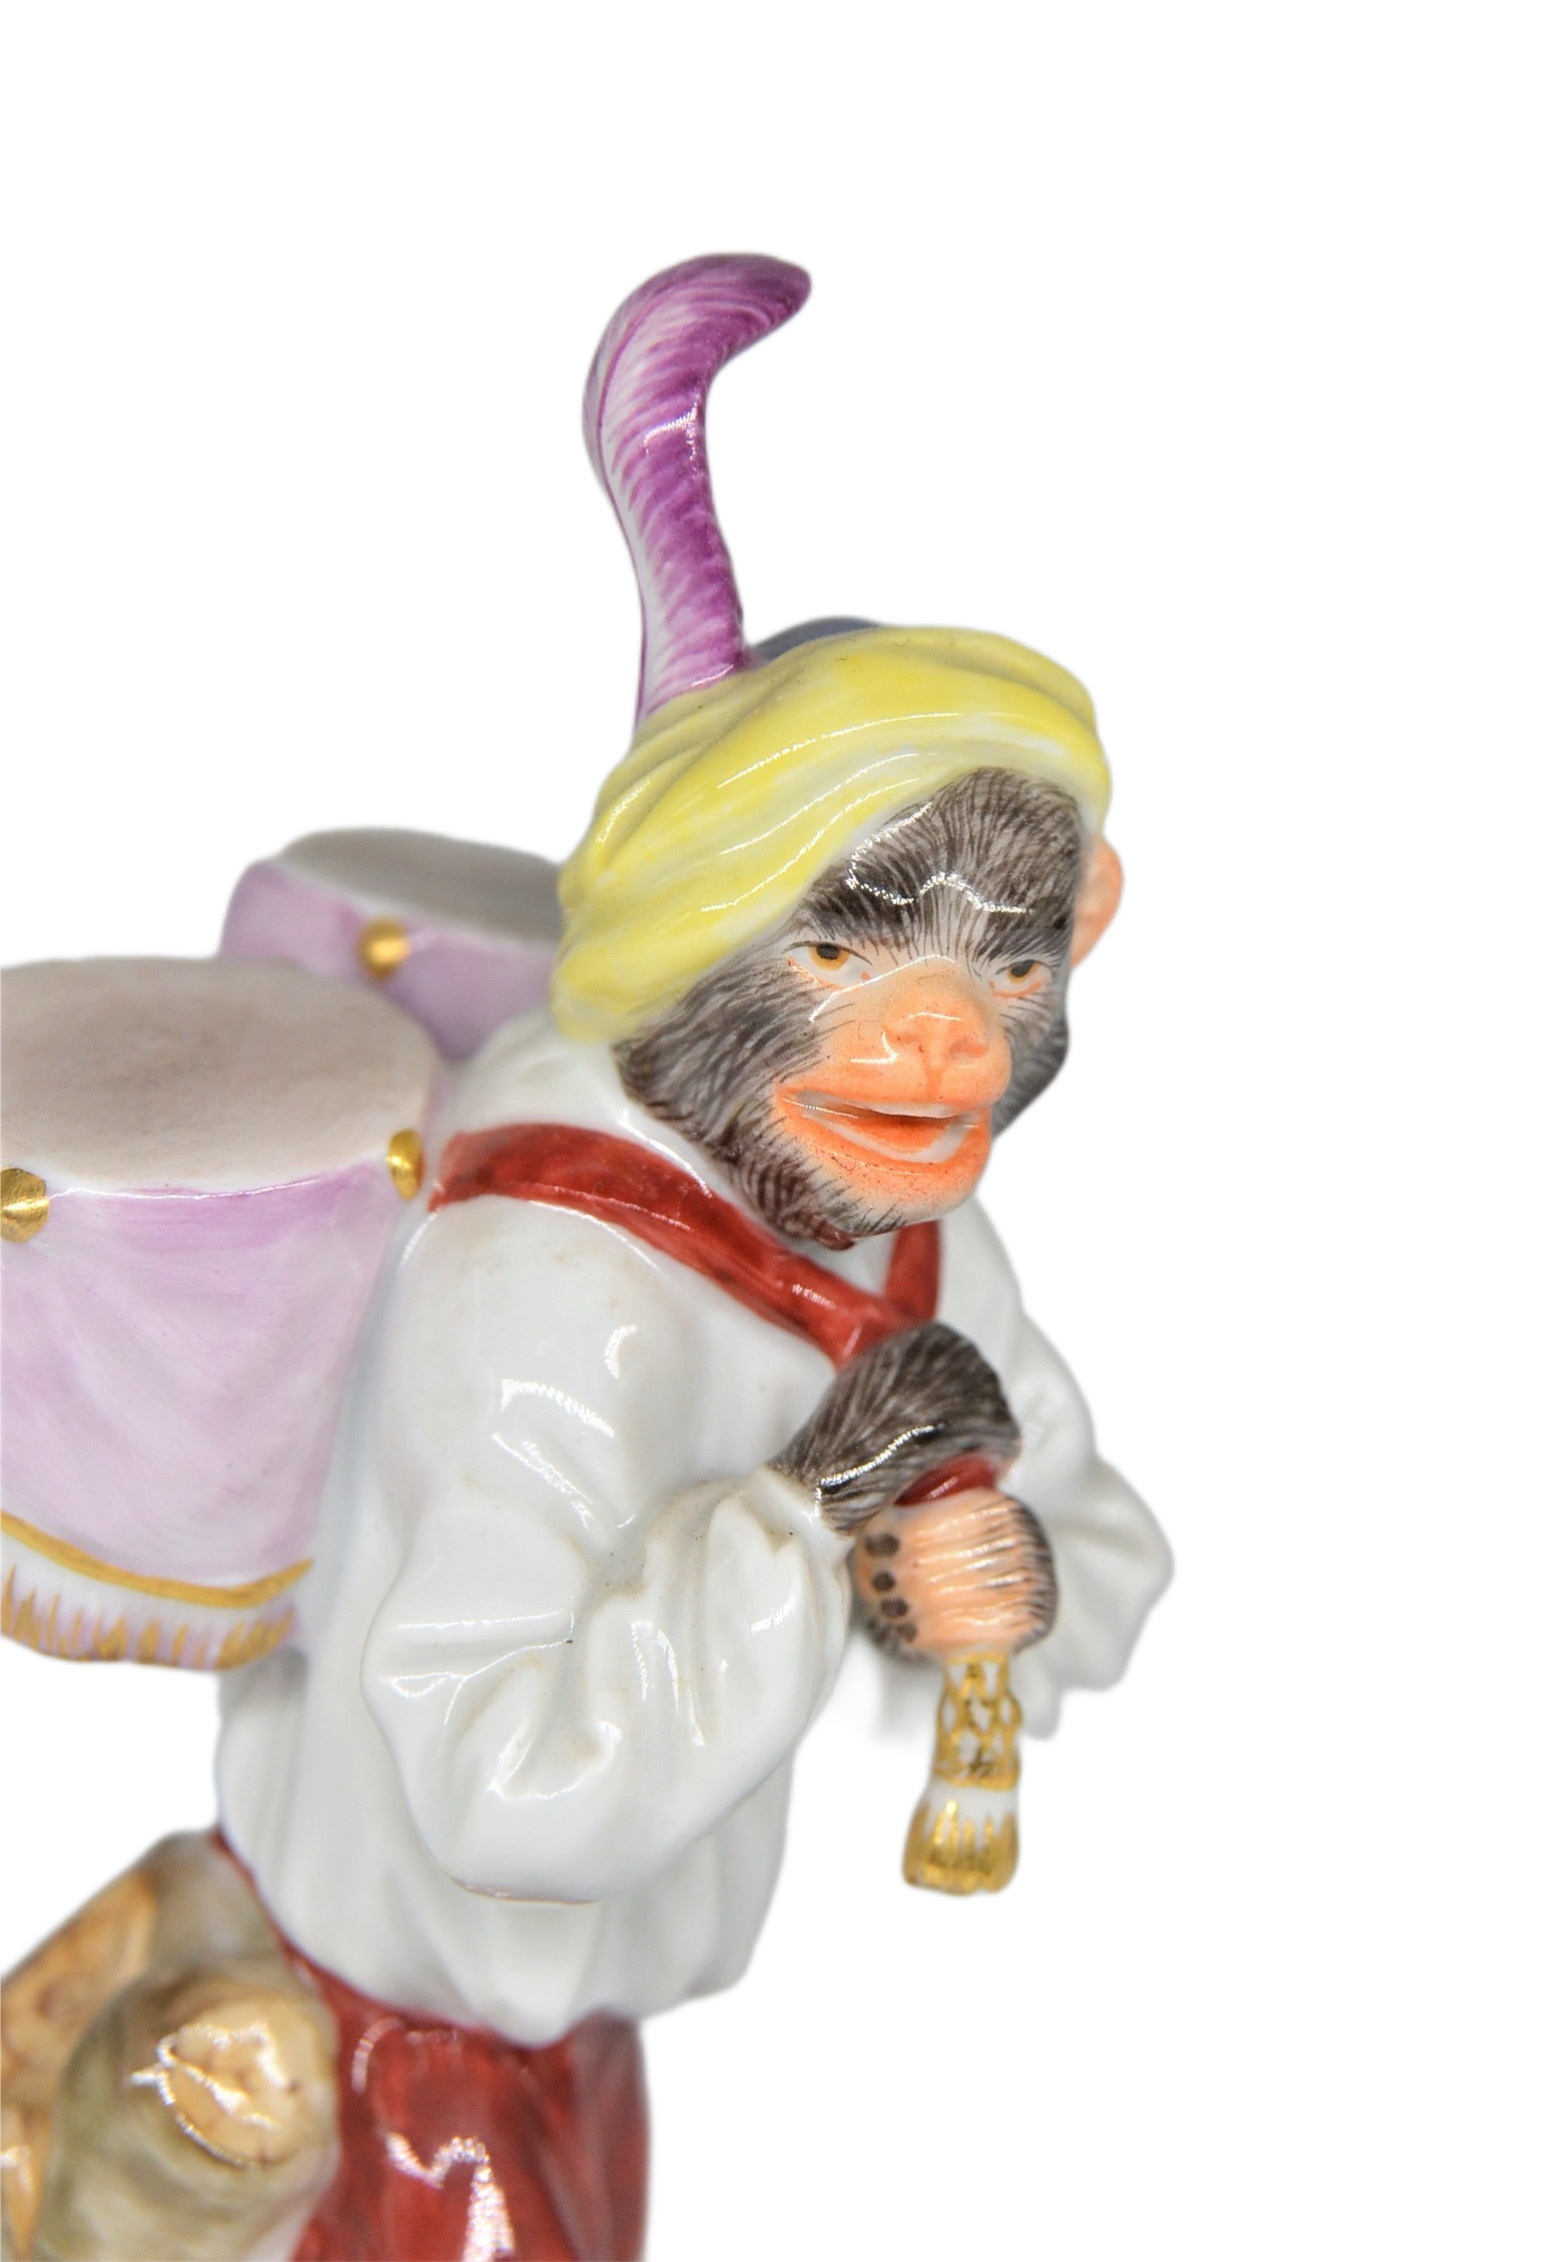 'Drummer' figurine from 'Monkey Orchestra' 0